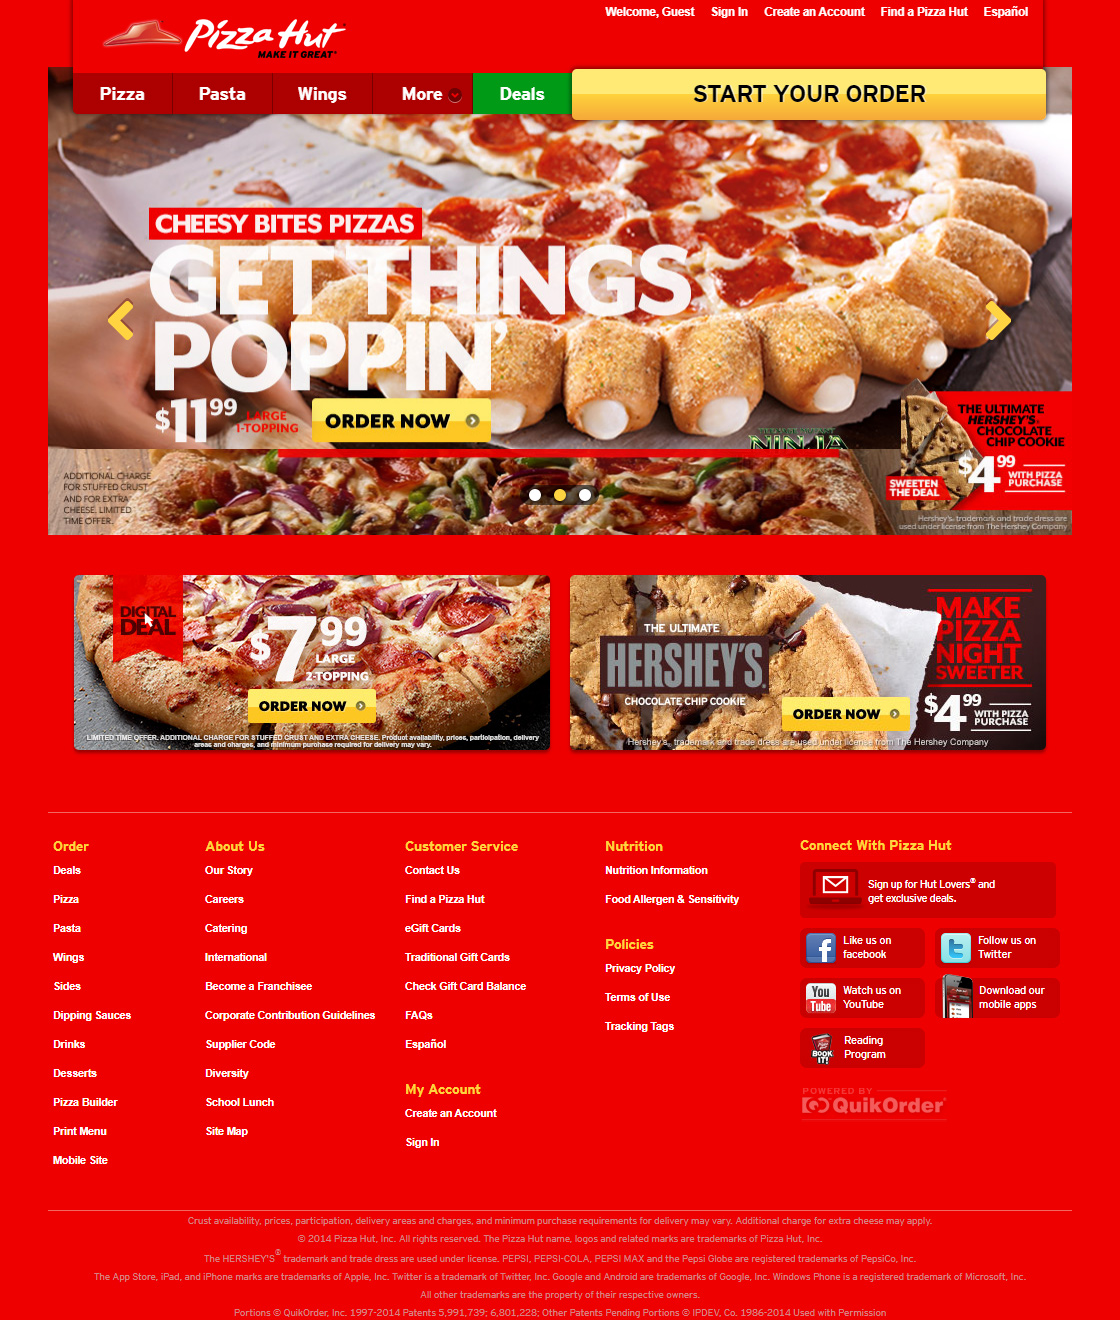 Pizza Hut website in 2014